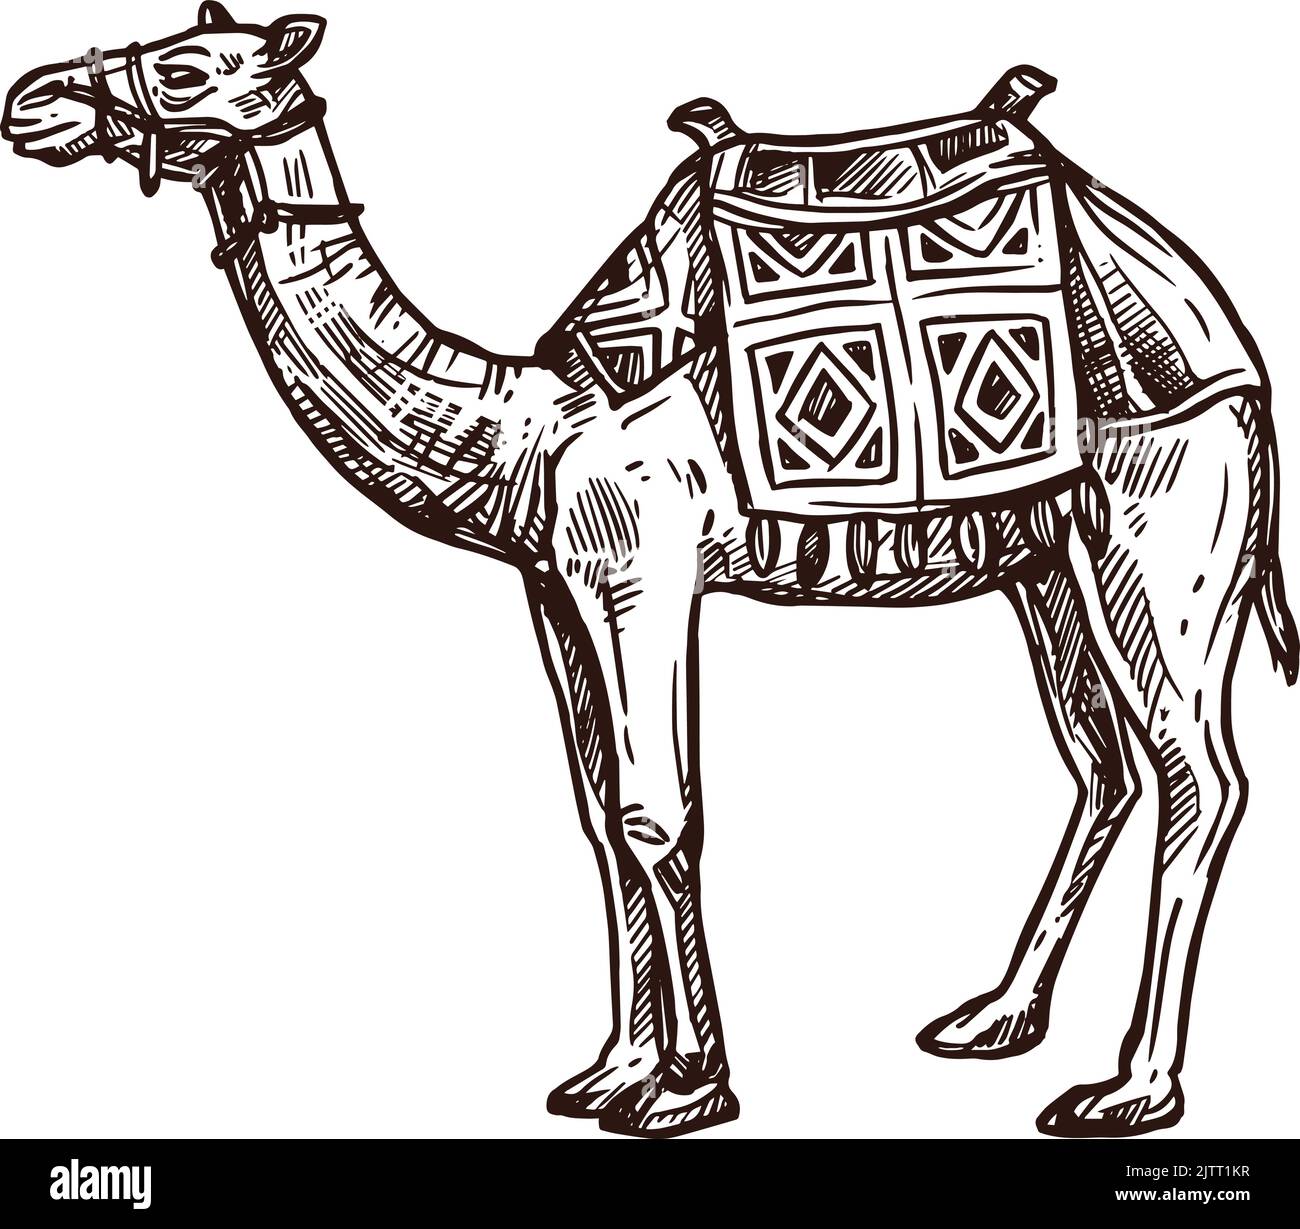 Arabian camel harness Stock Vector Images - Alamy